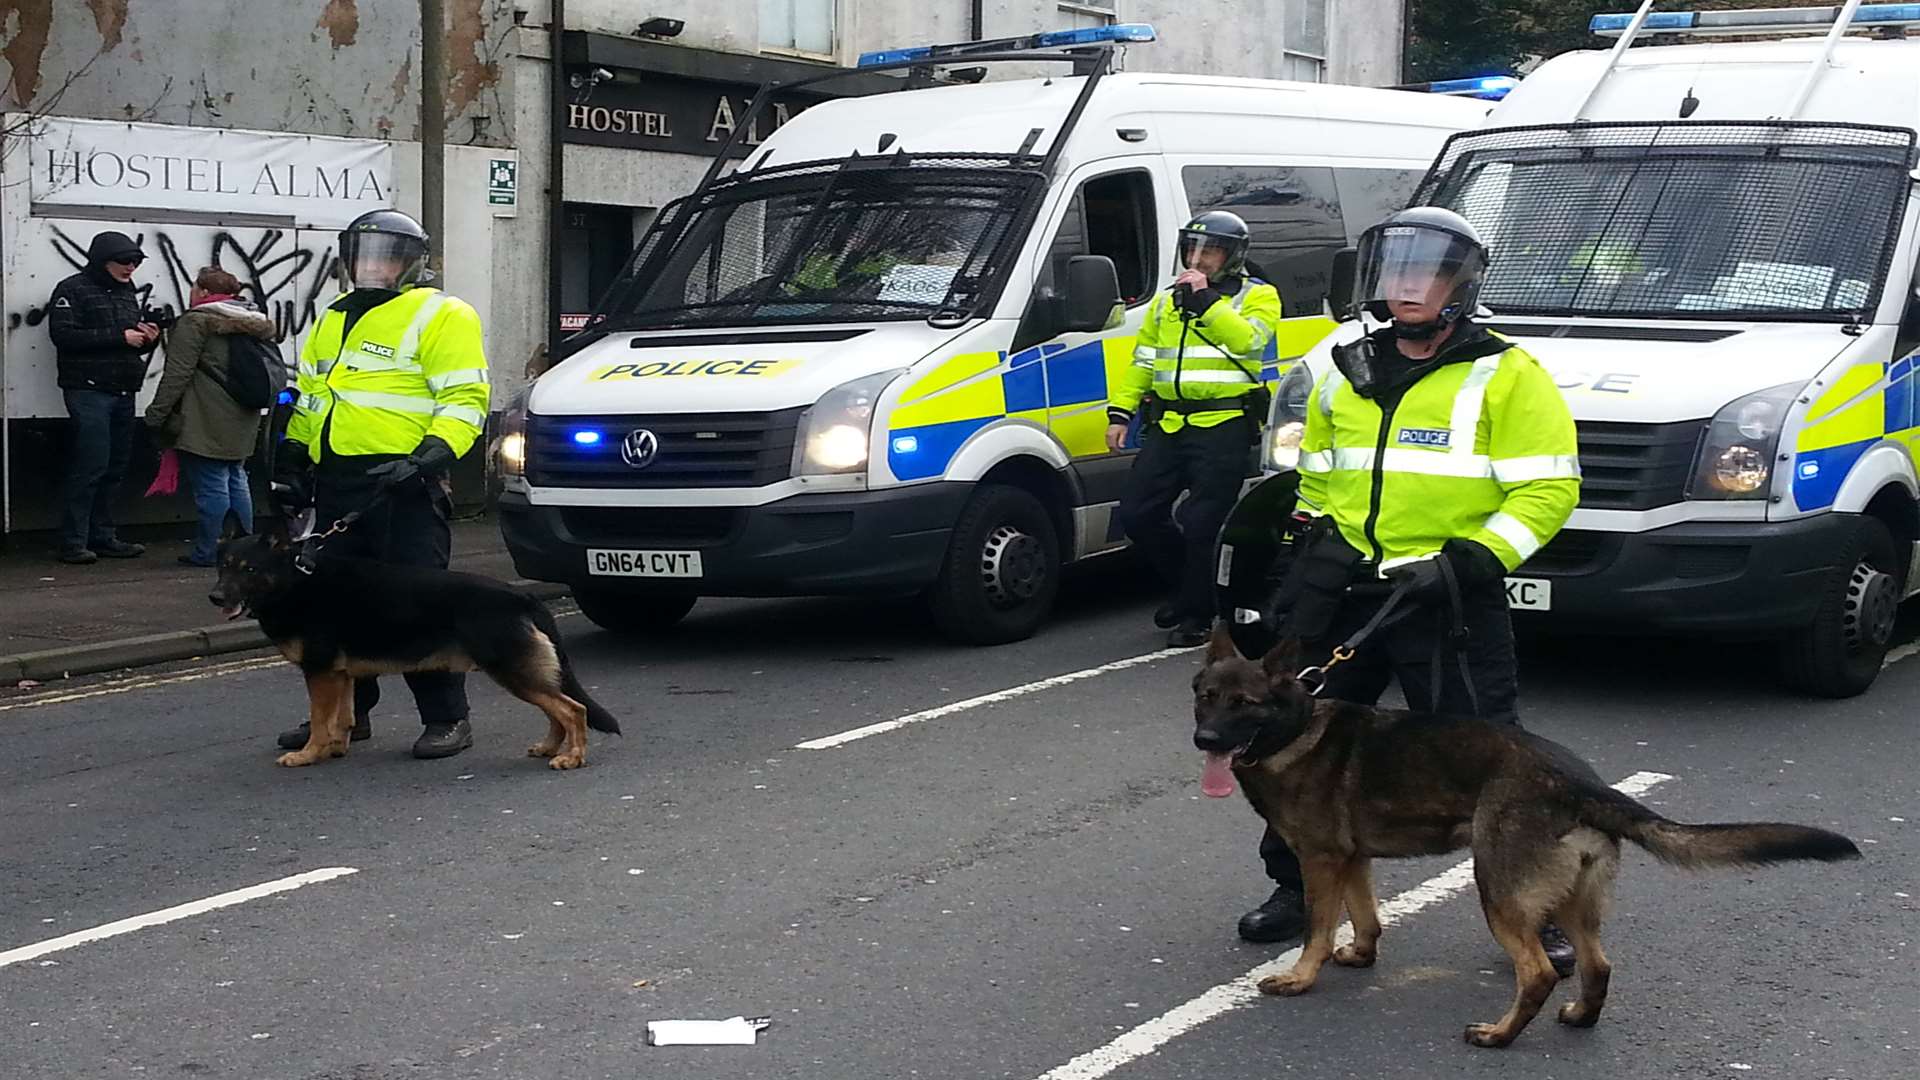 Dover riot scene, Folkestone Road. Police brought in dogs when trouble escalated.